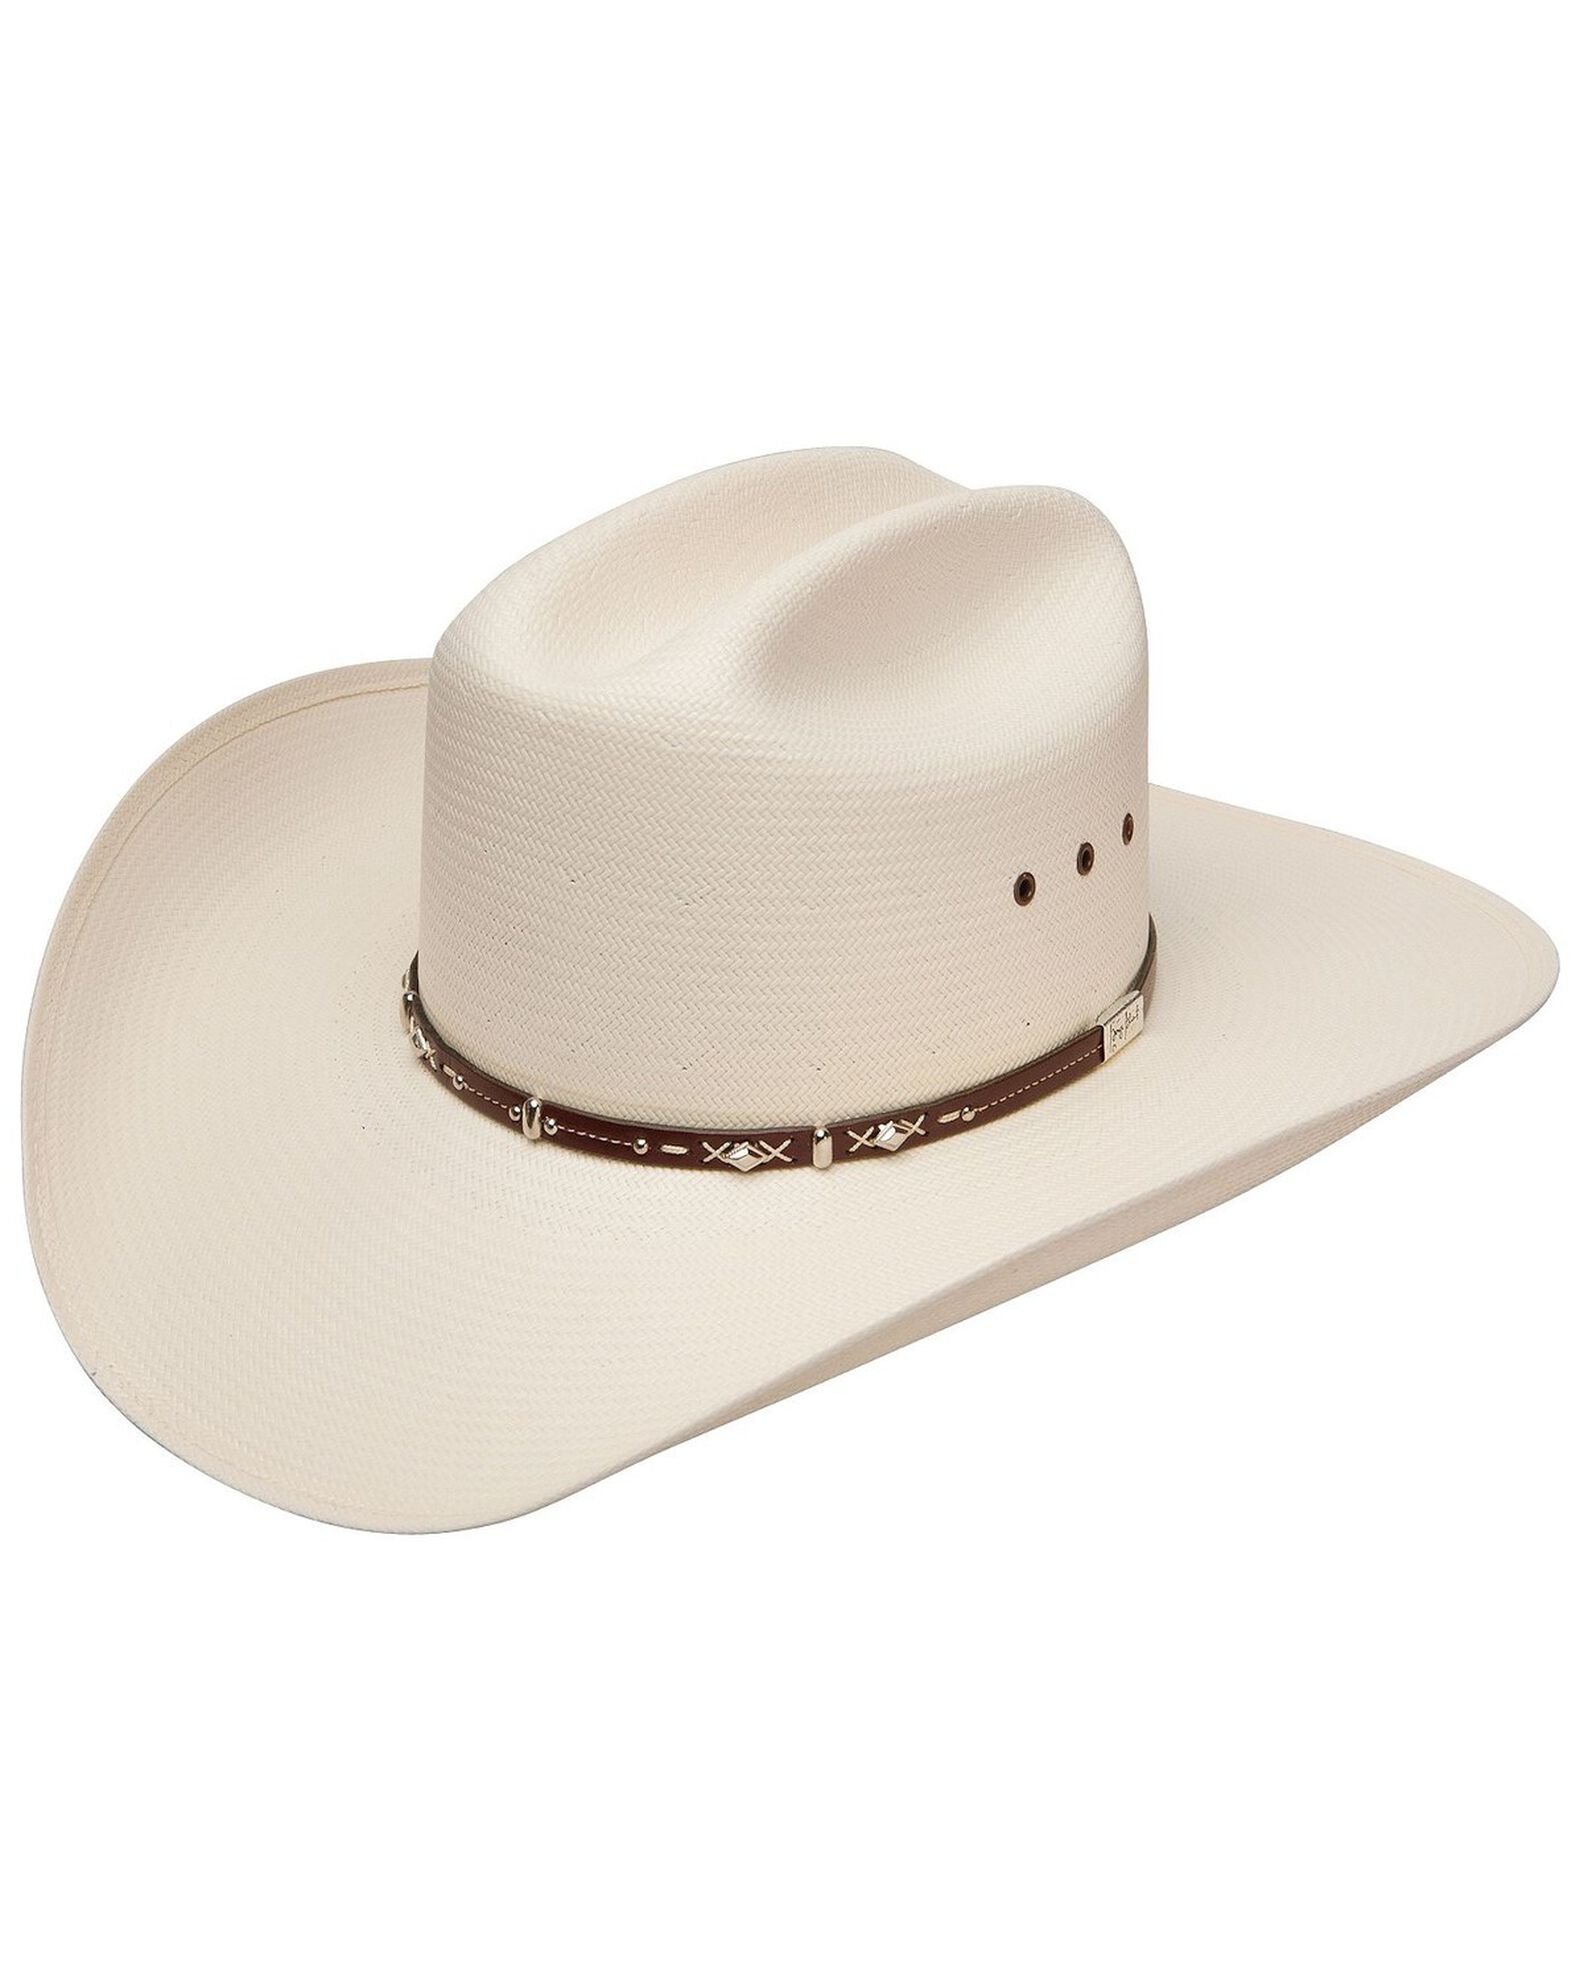 Product Name: Resistol Men's George Strait Hazer Straw Hat